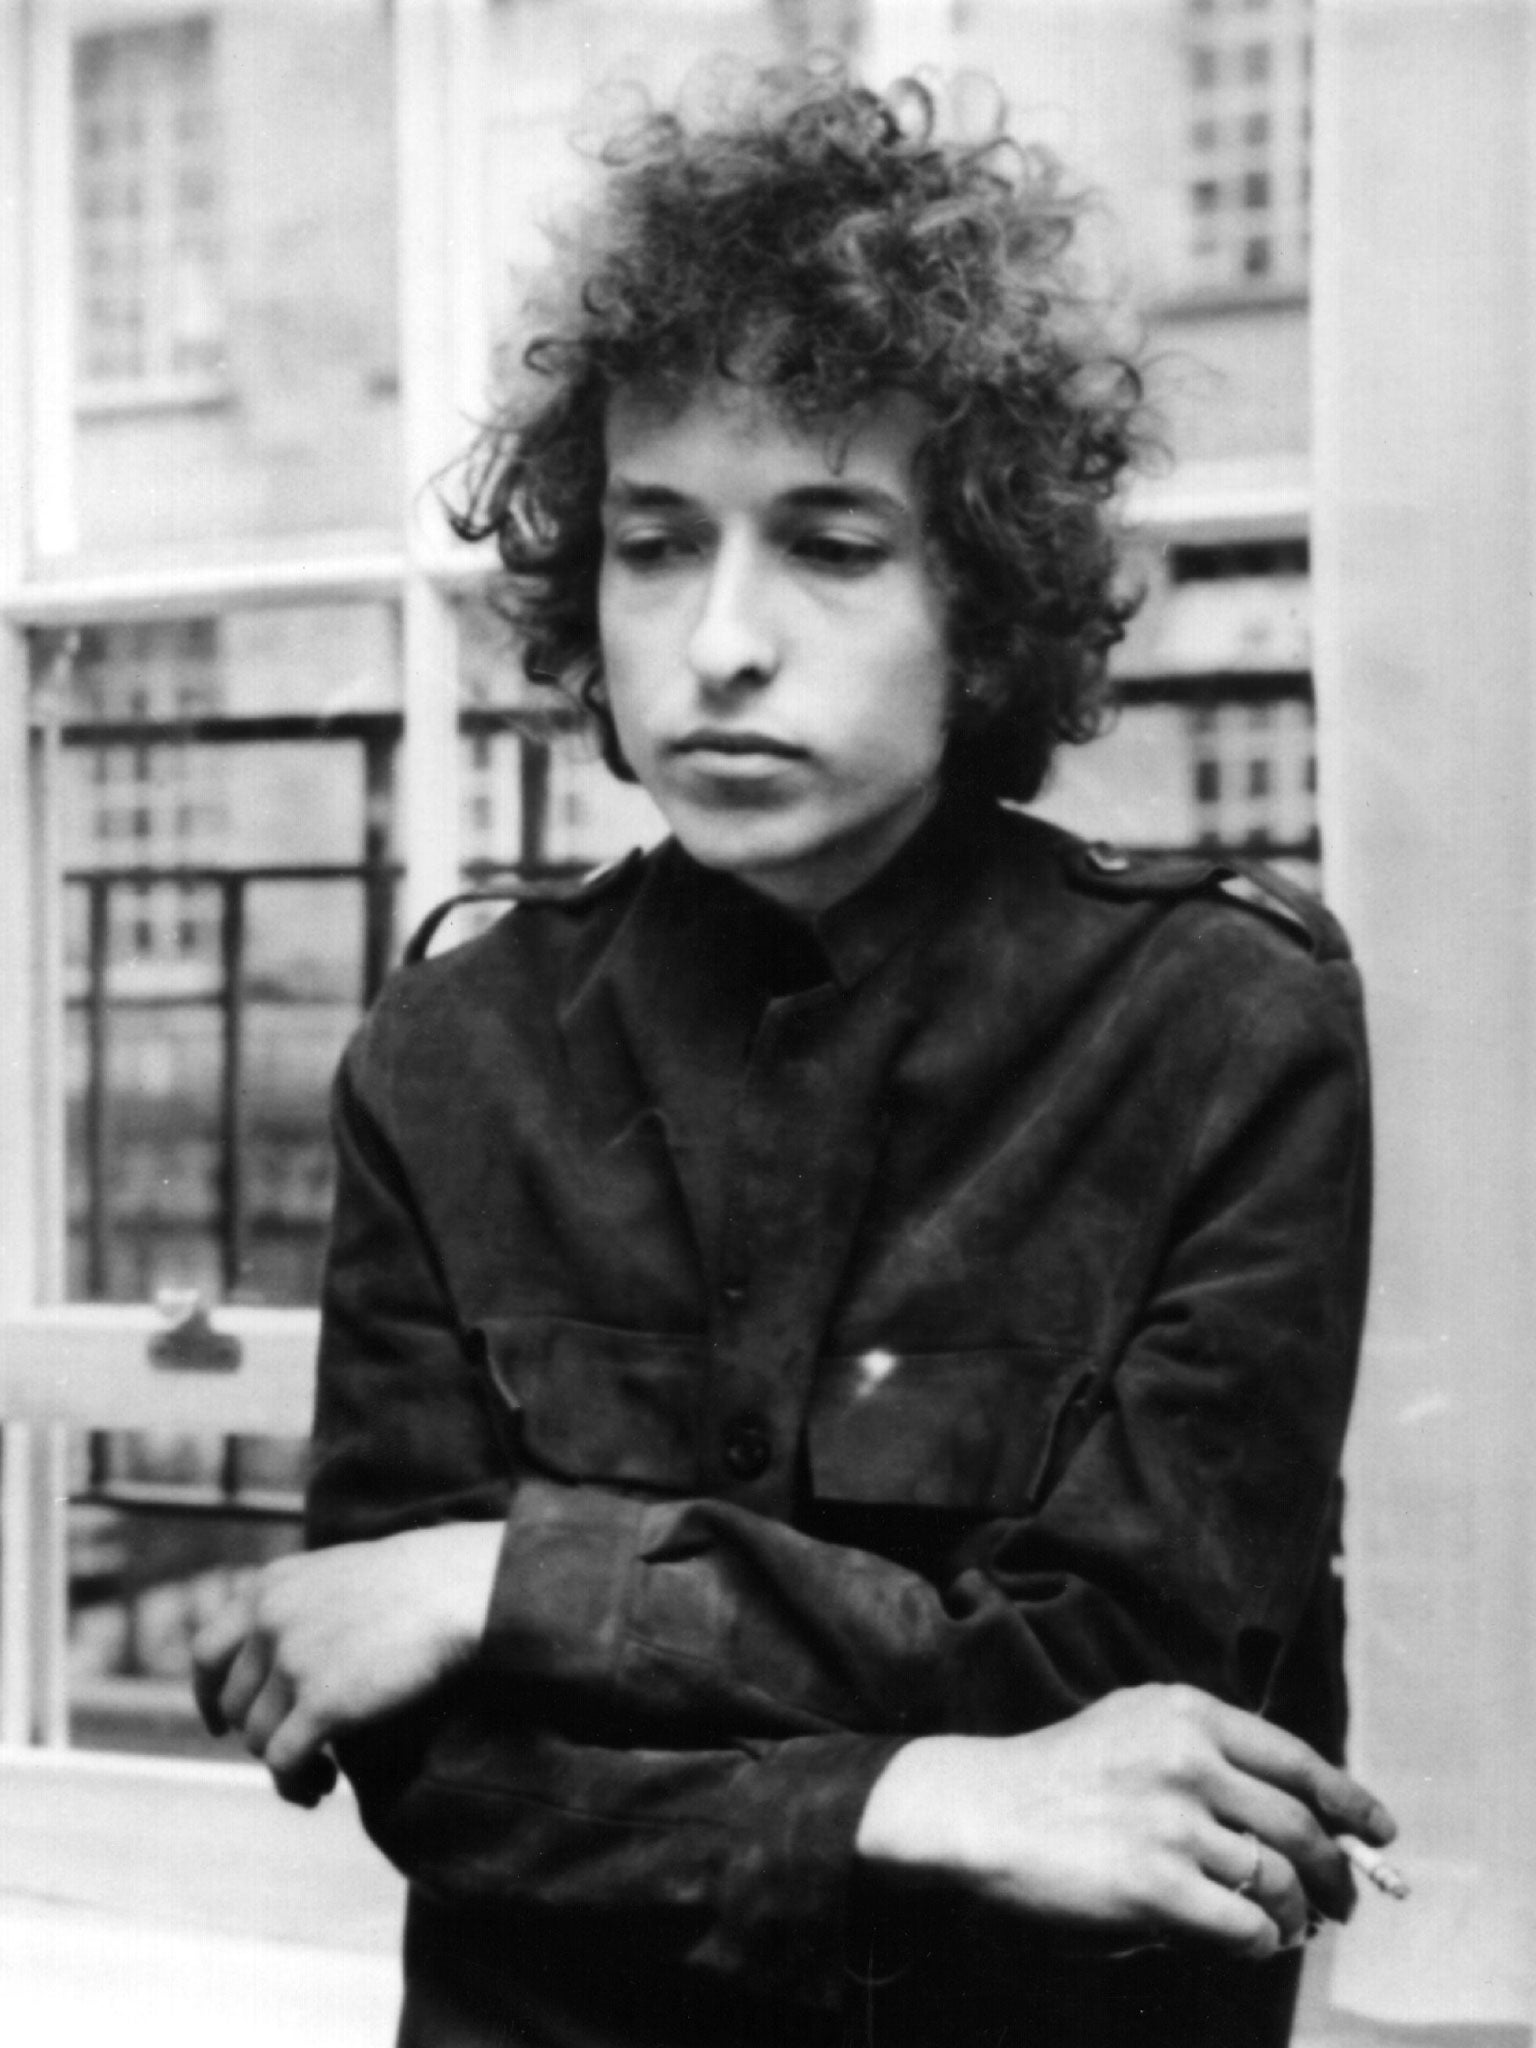 Bootleg series: Bob Dylan